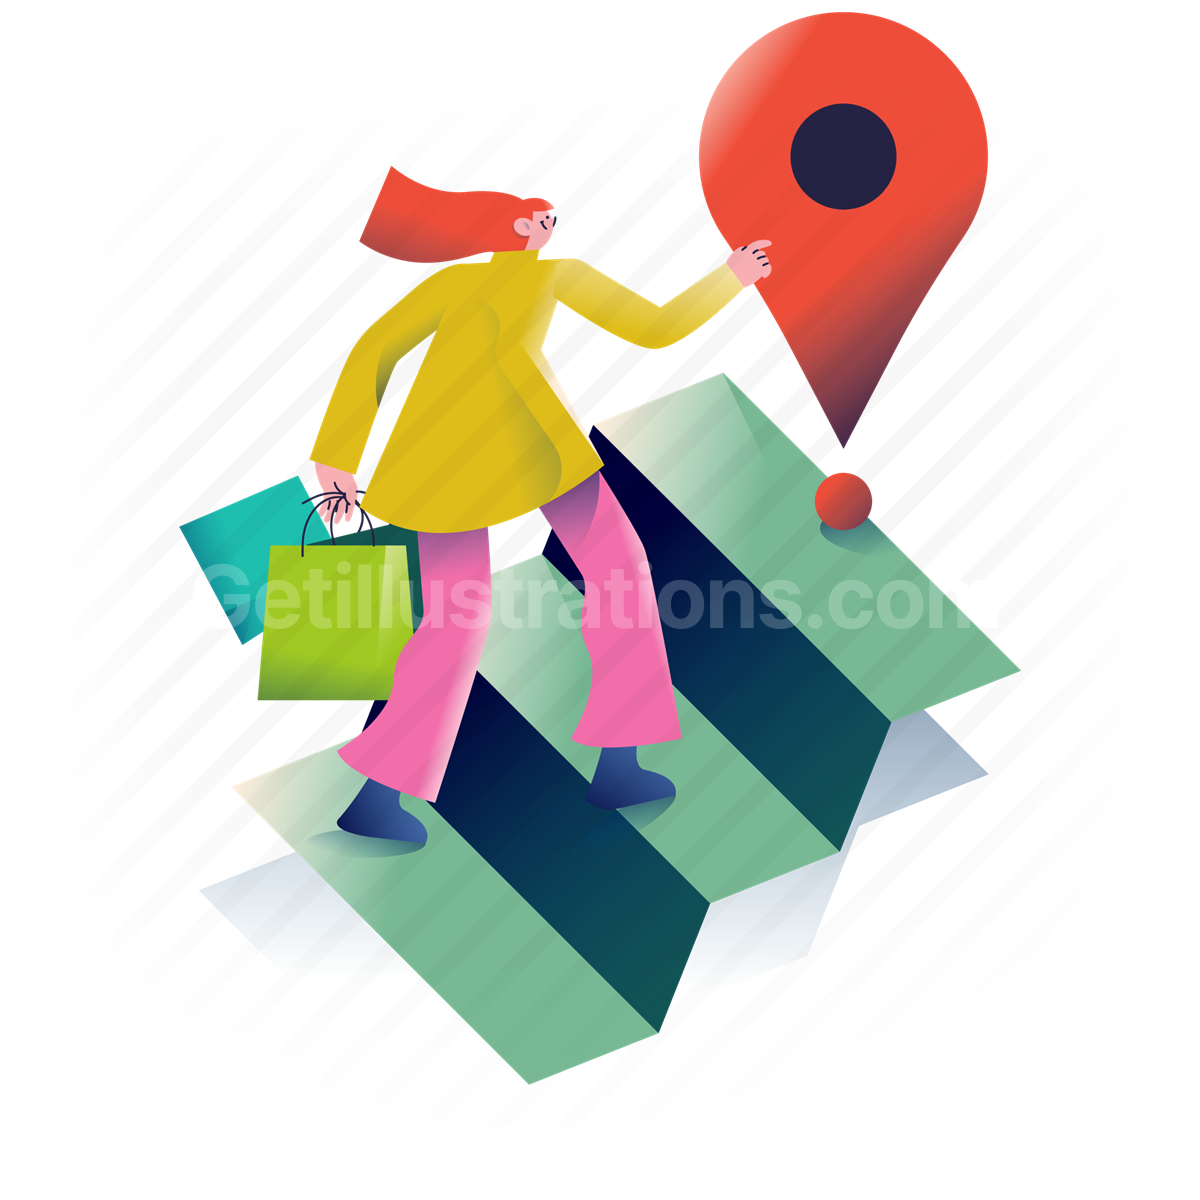 destination, navigation, marker, pin, map, gps, commerce, shop, store